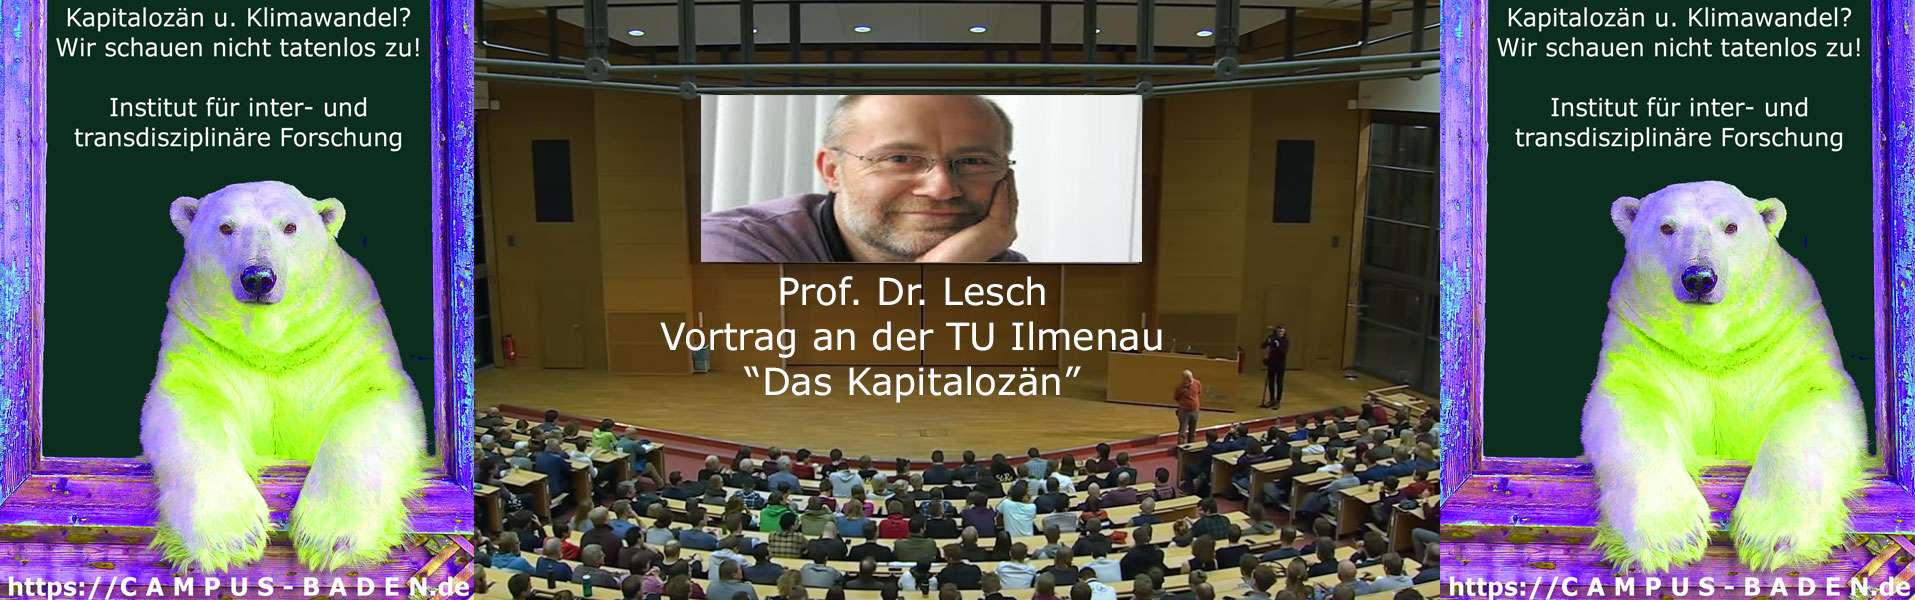 Das Kapitalozän Prof. Dr. Lesch Vortrag TU Ilmenau